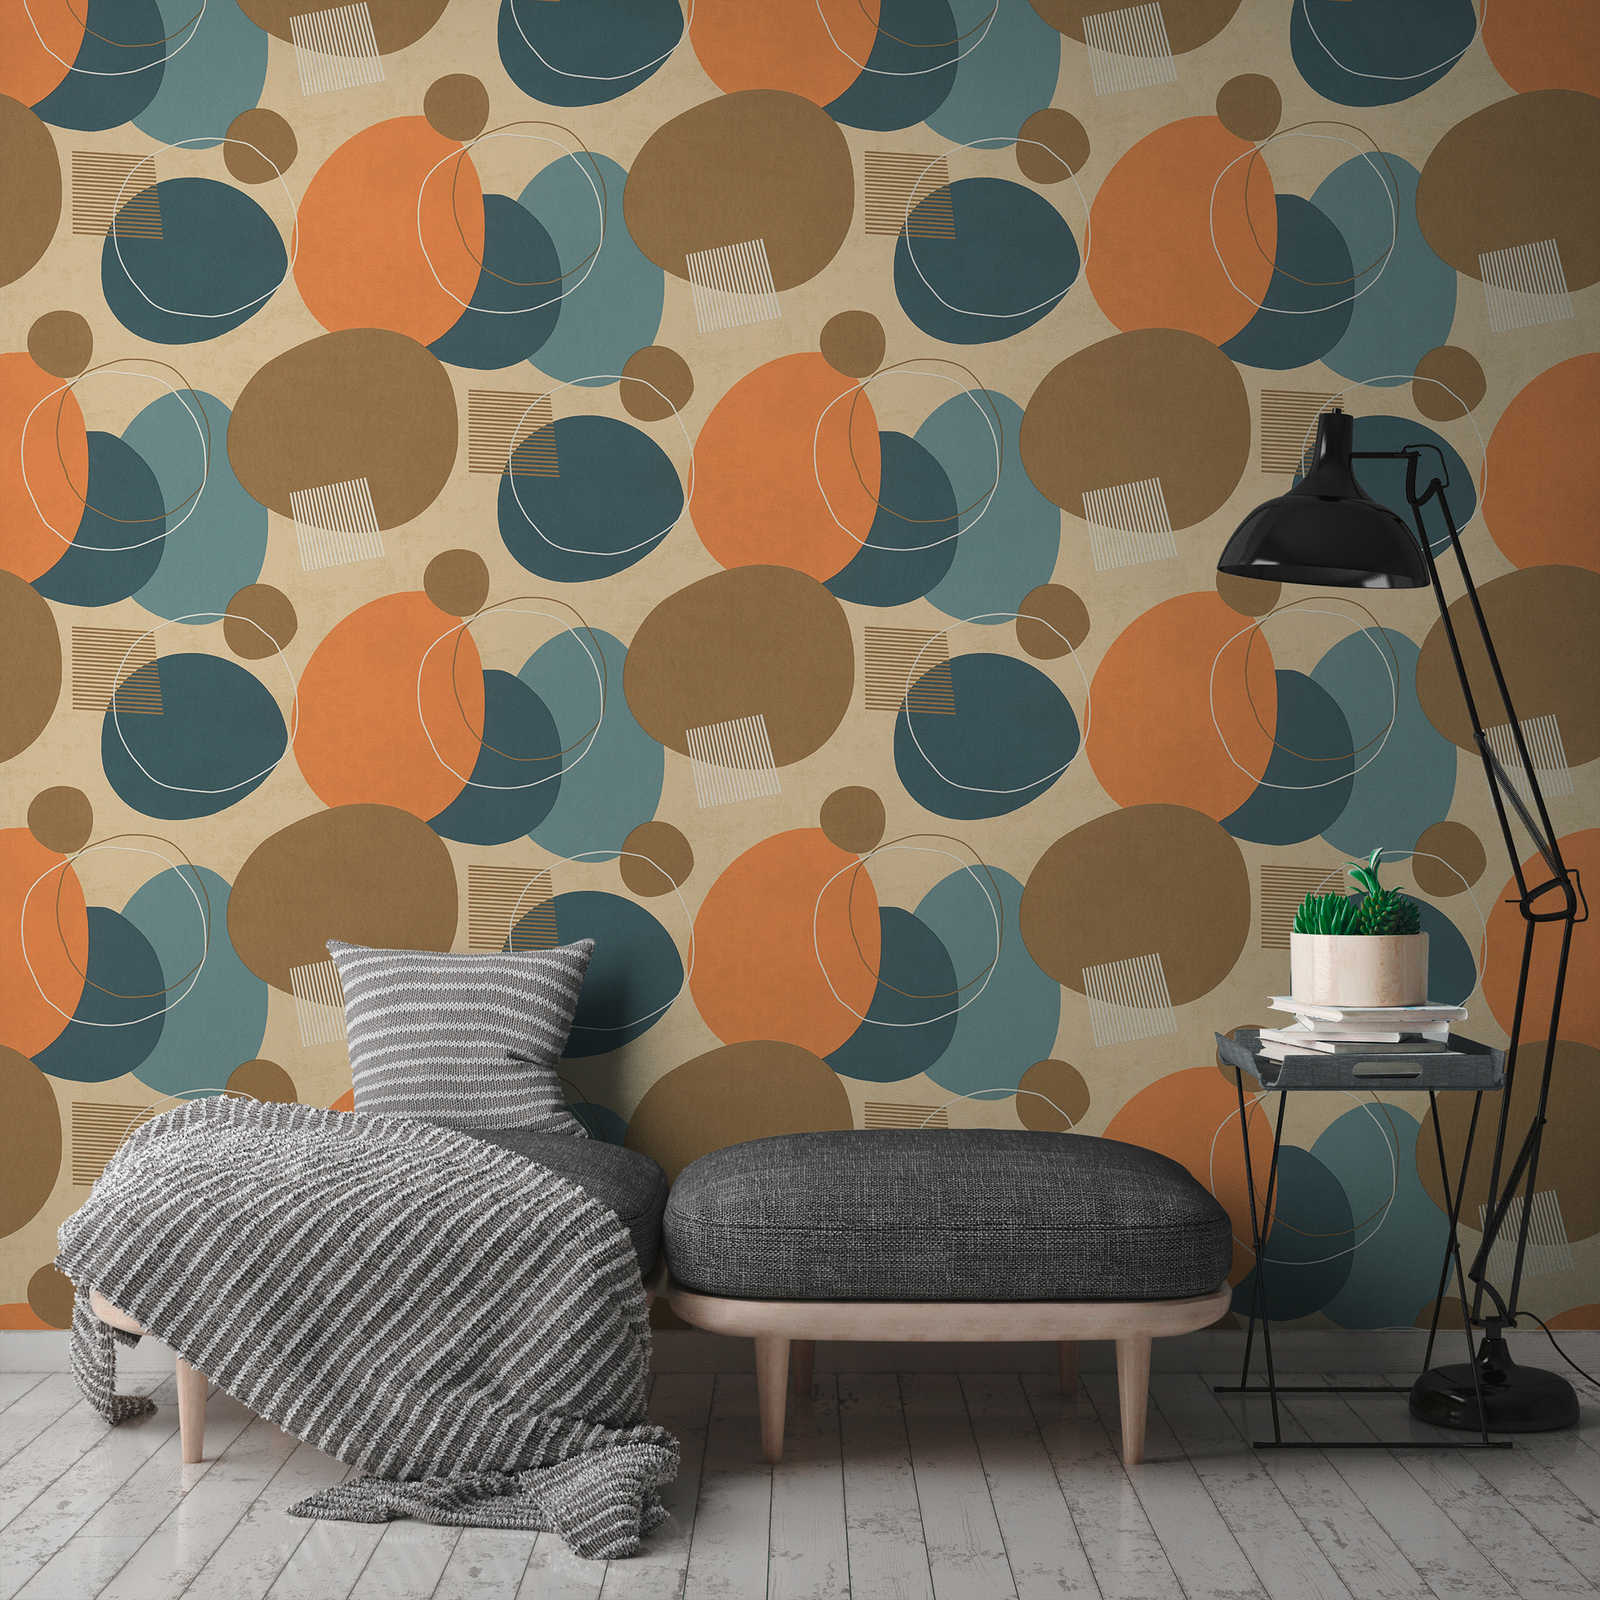             Retro wallpaper mid century modern pattern - orange, brown, blue
        